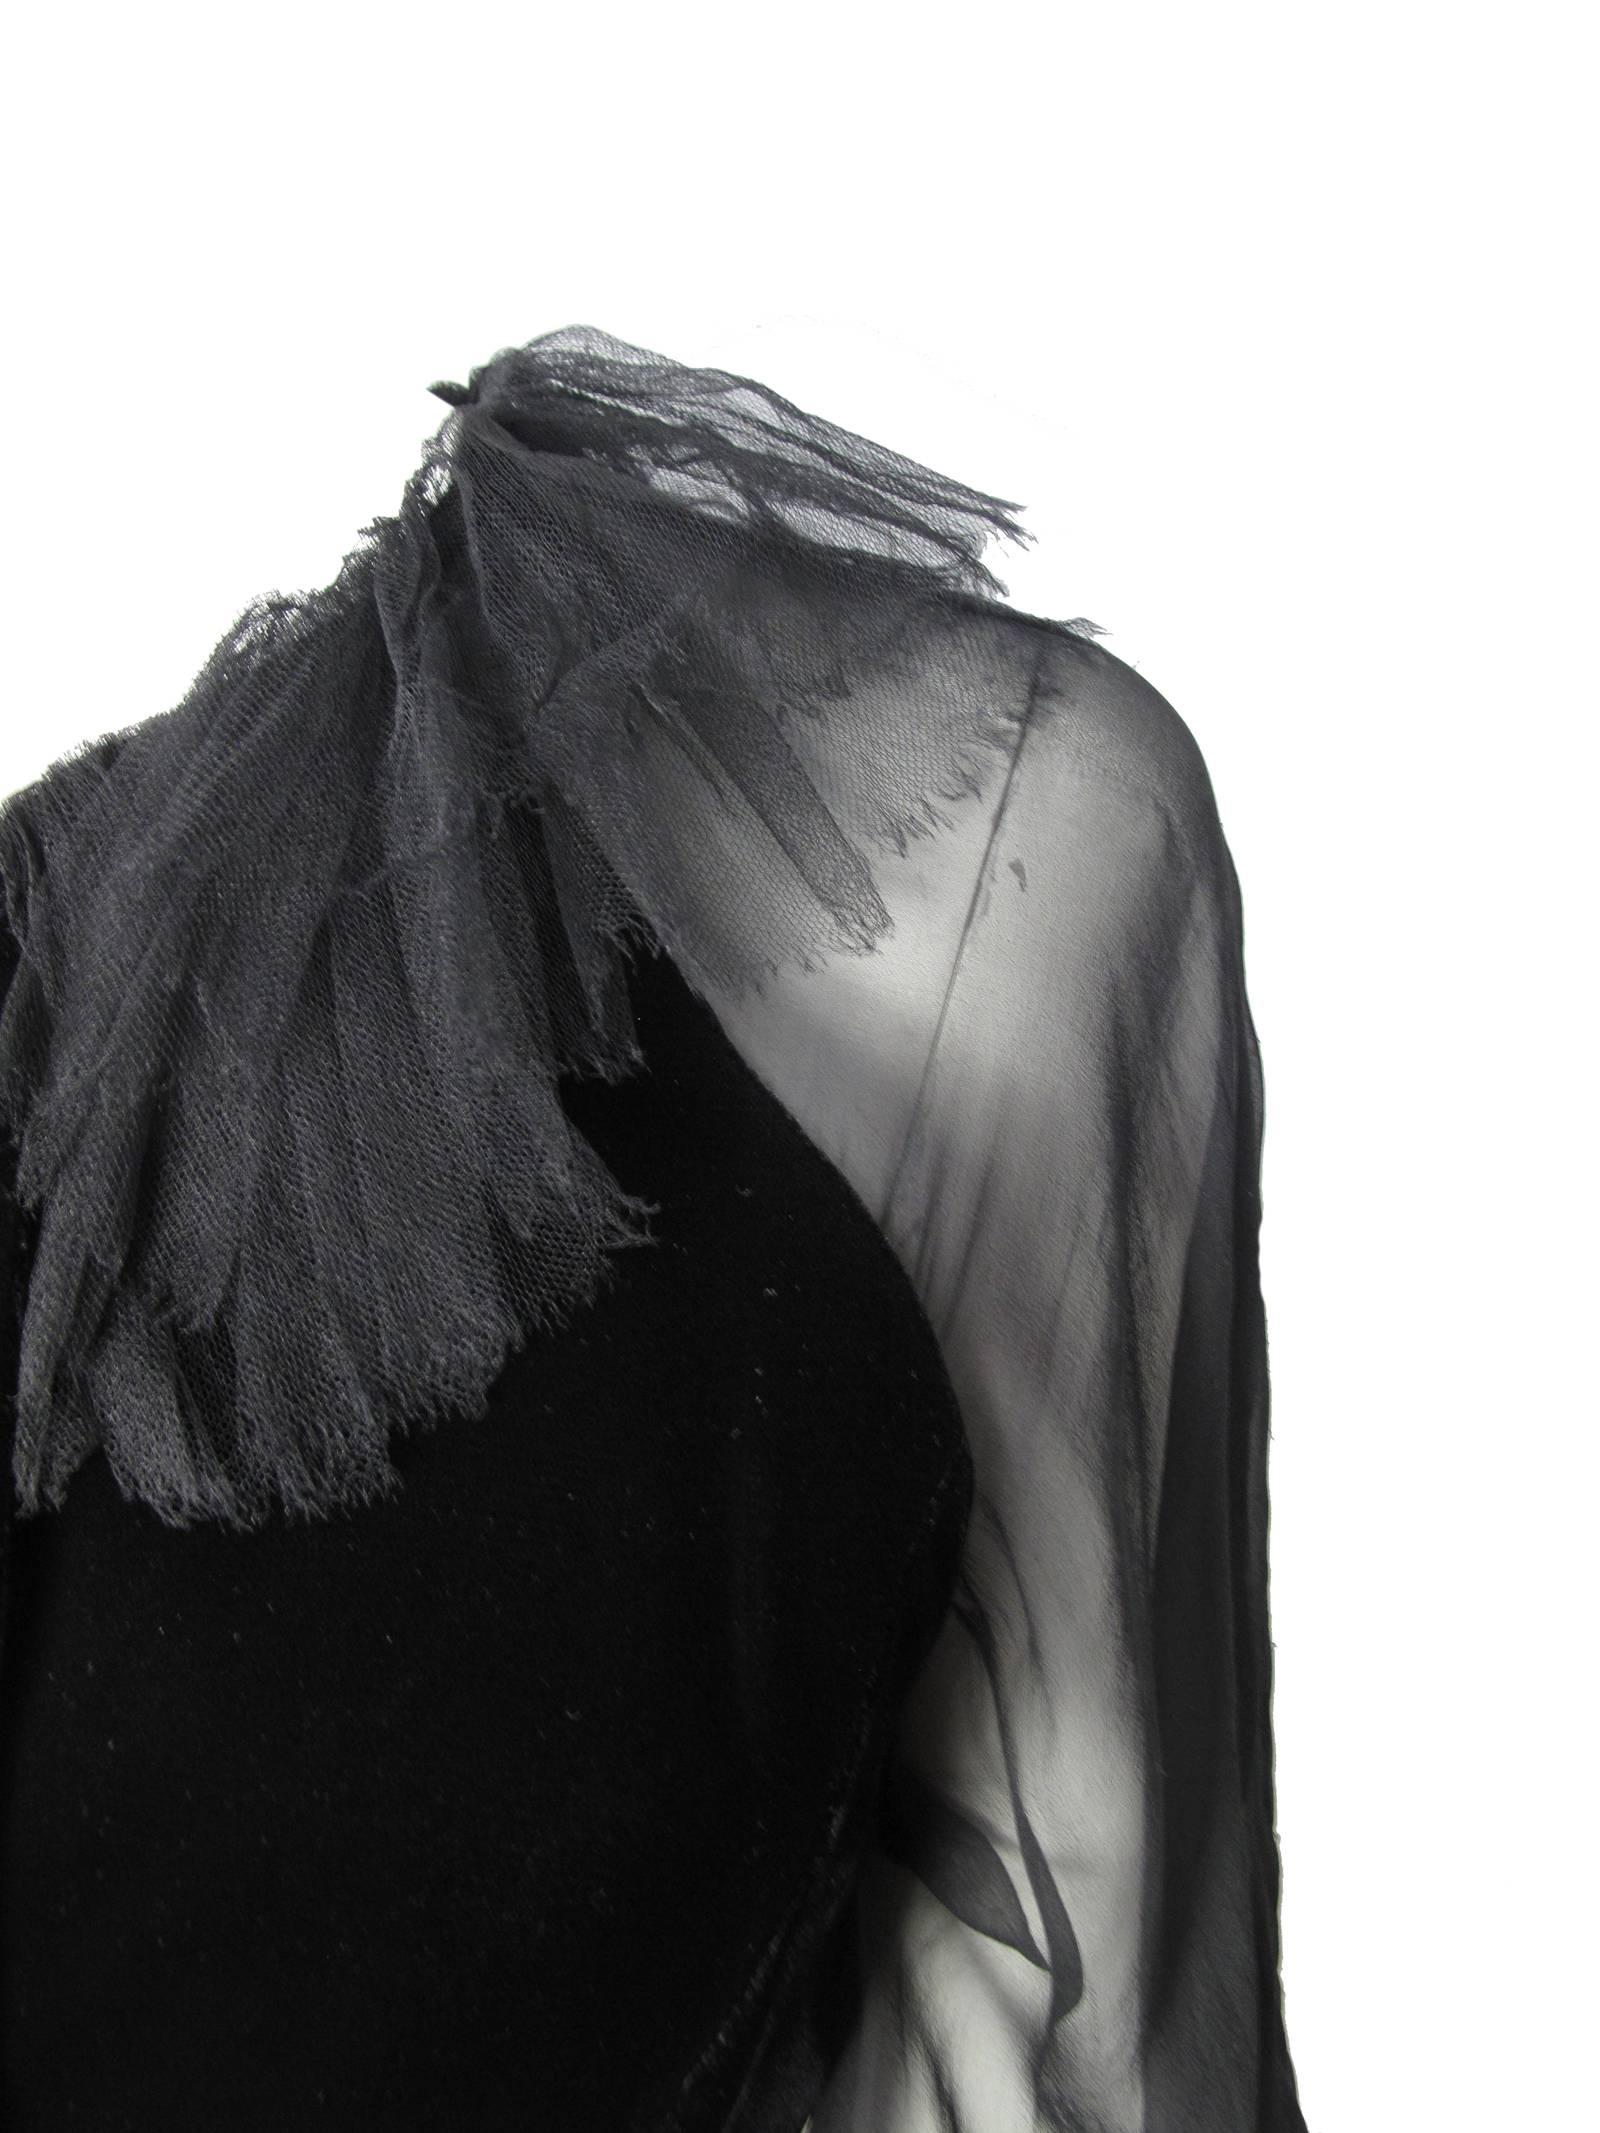 Women's Oscar de la Renta black velvet dress with chiffon sleeves and collar